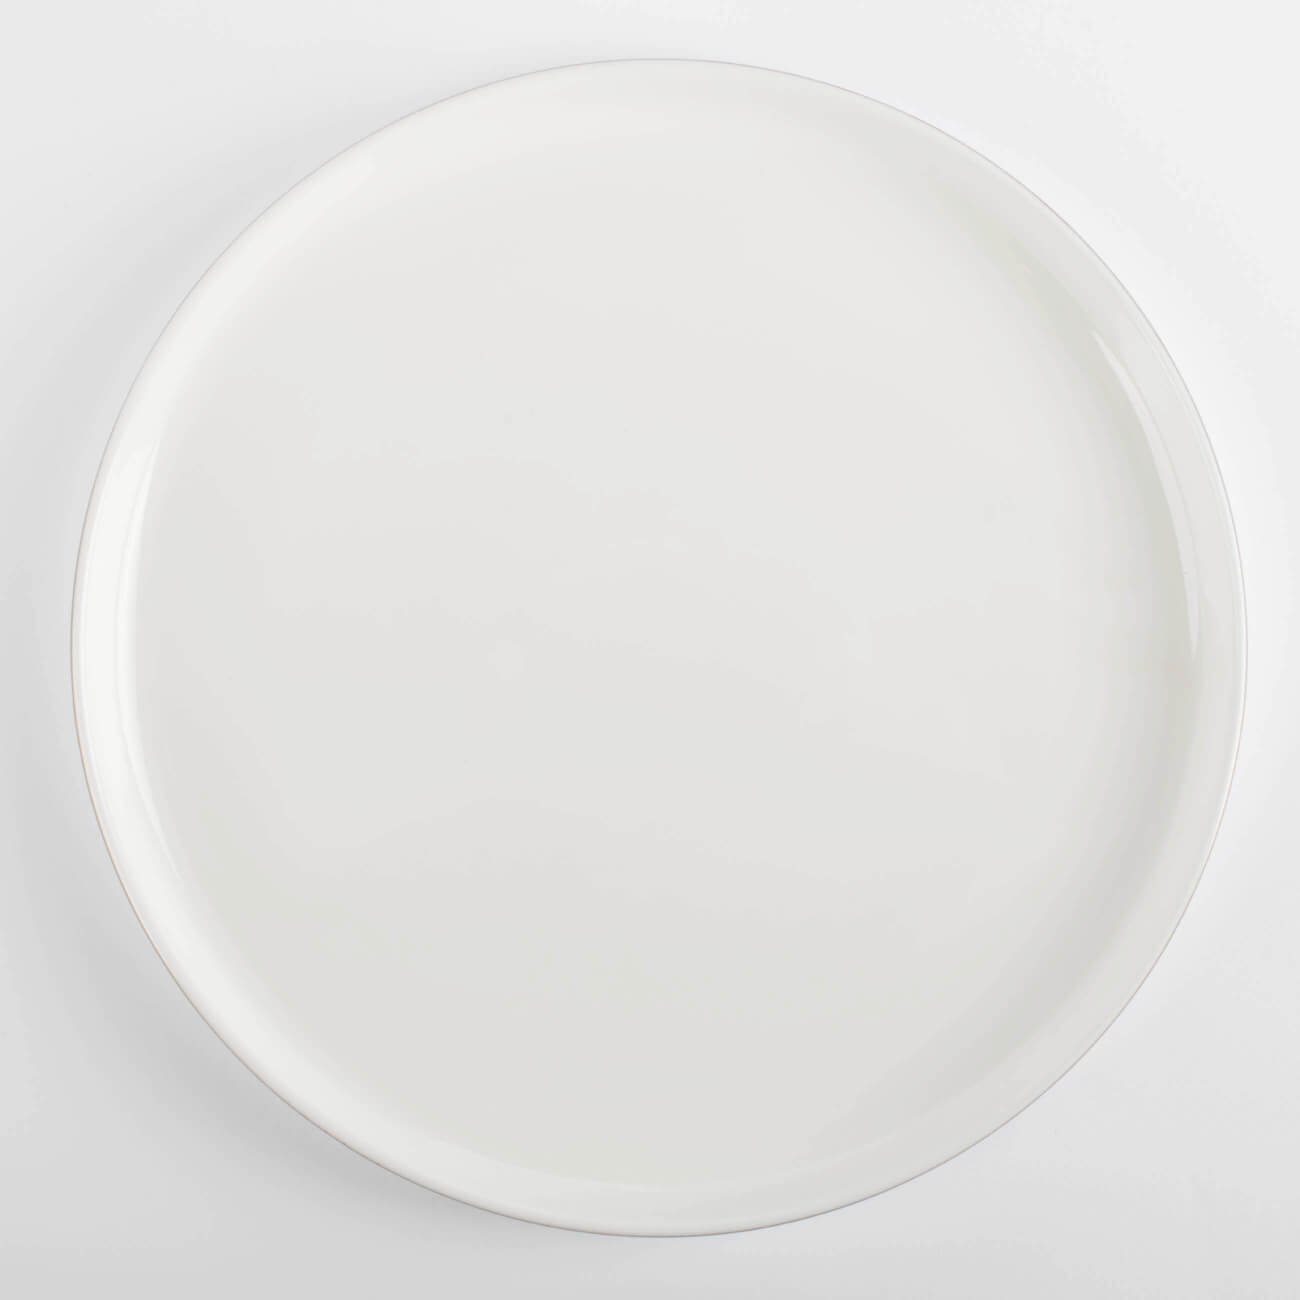 Тарелка обеденная, 26 см, фарфор F, белая, Ideal gold тарелка обеденная 26 см фарфор p белая дом amour